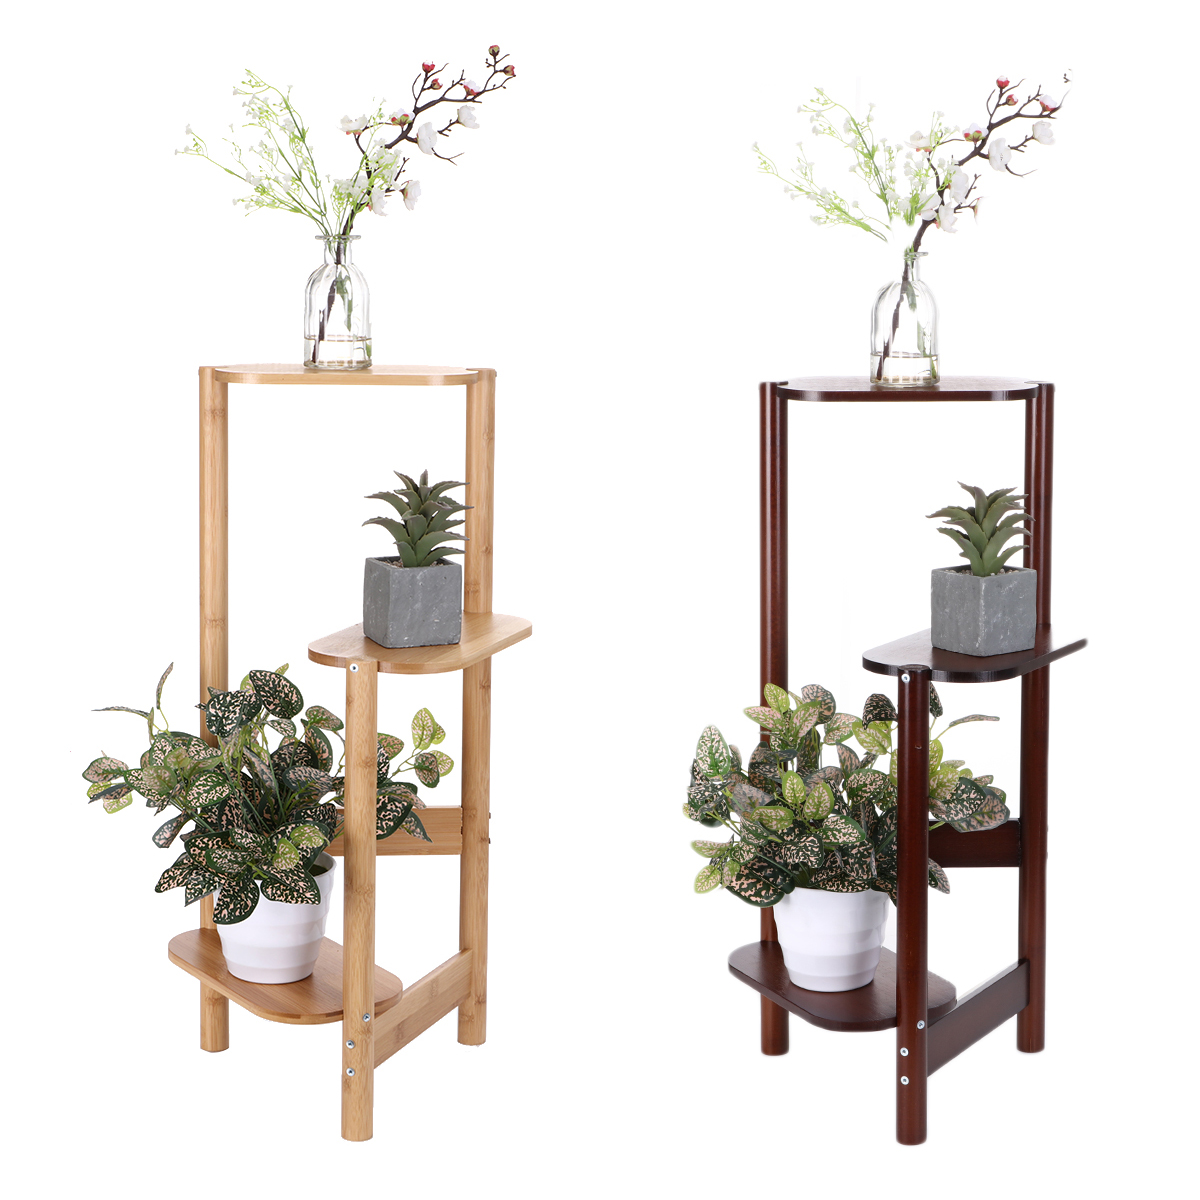 3-Tier-Corner-Wooden-Plant-Stand-Garden-Flower-Pot-Holder-Display-Rack-Shelves-1865237-1